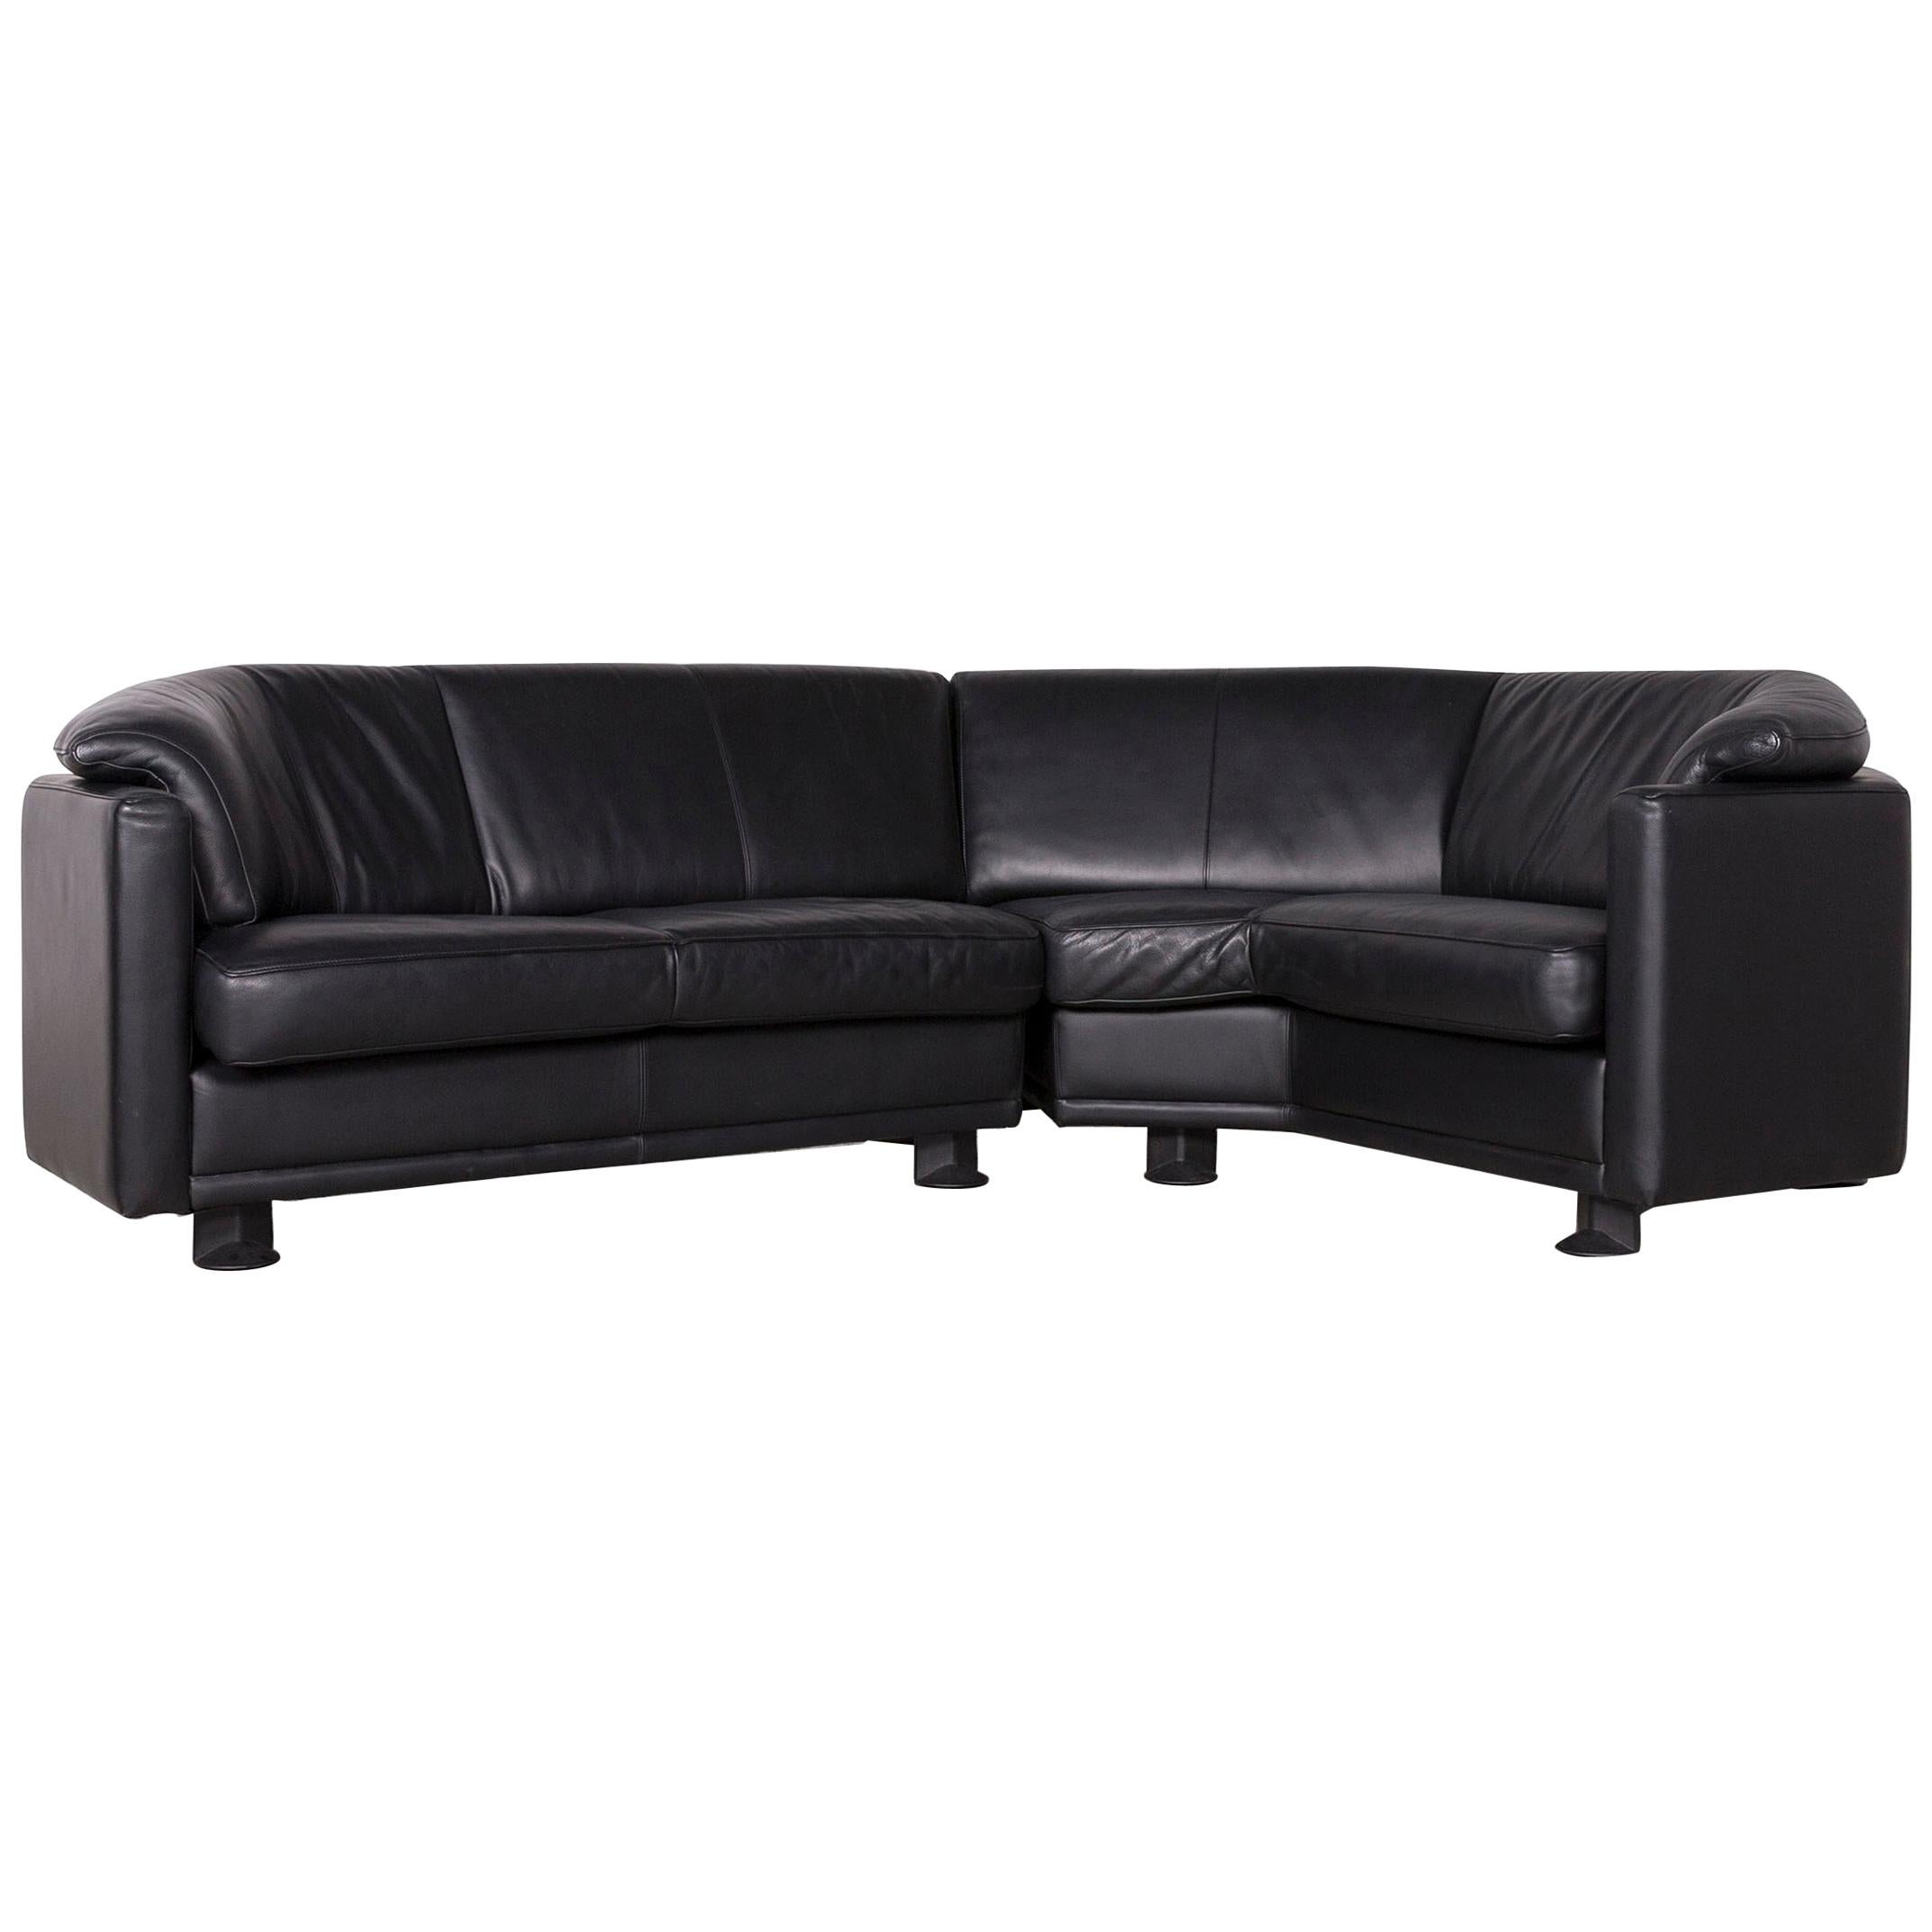 Leolux Designer Corner Couch Leather Black Sofa For Sale